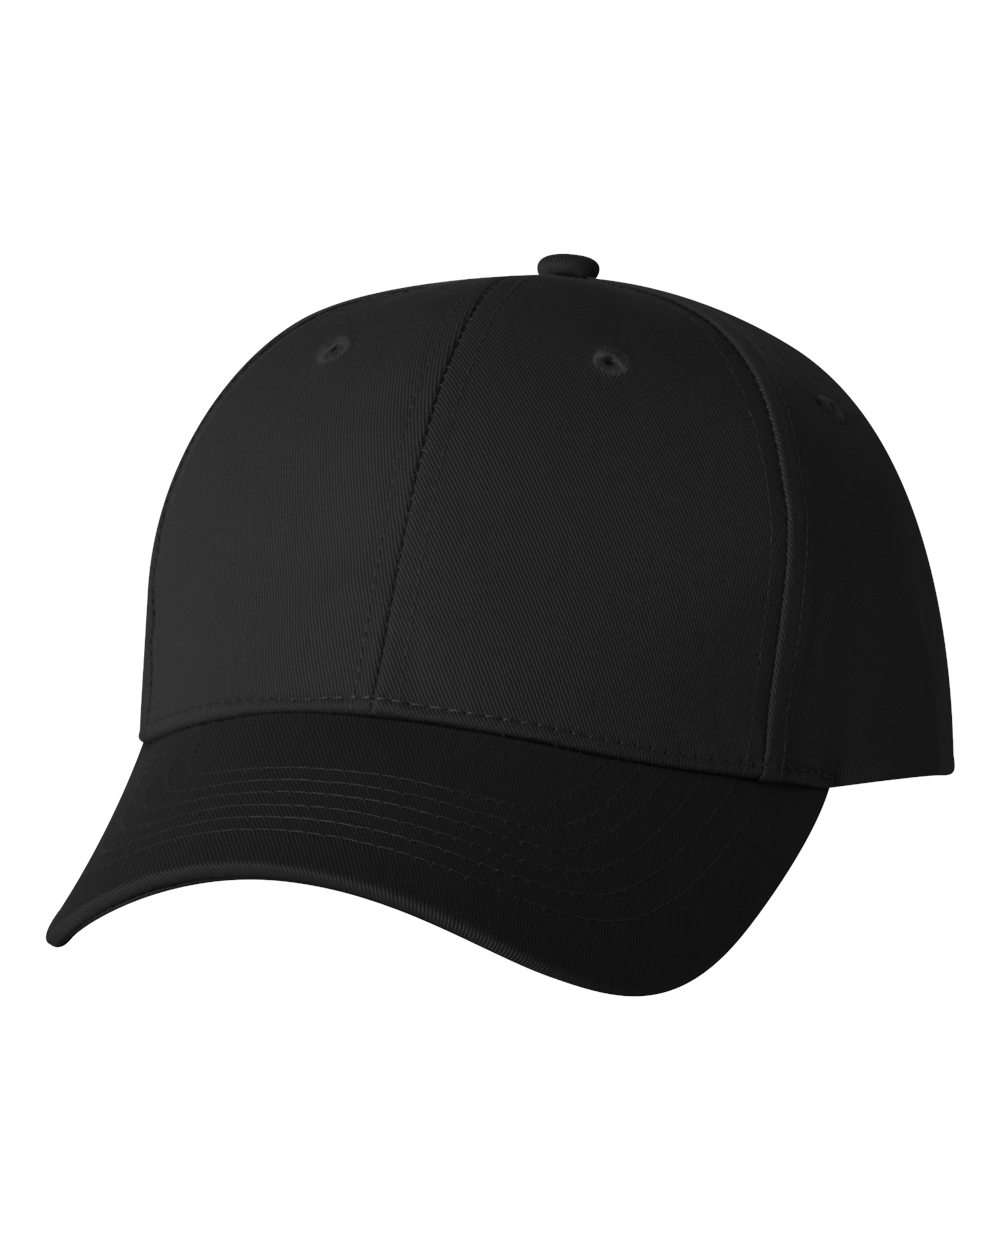 Pack Of 15 Bulk Wholesale Plain Baseball Cap Hat Adjustable (Black